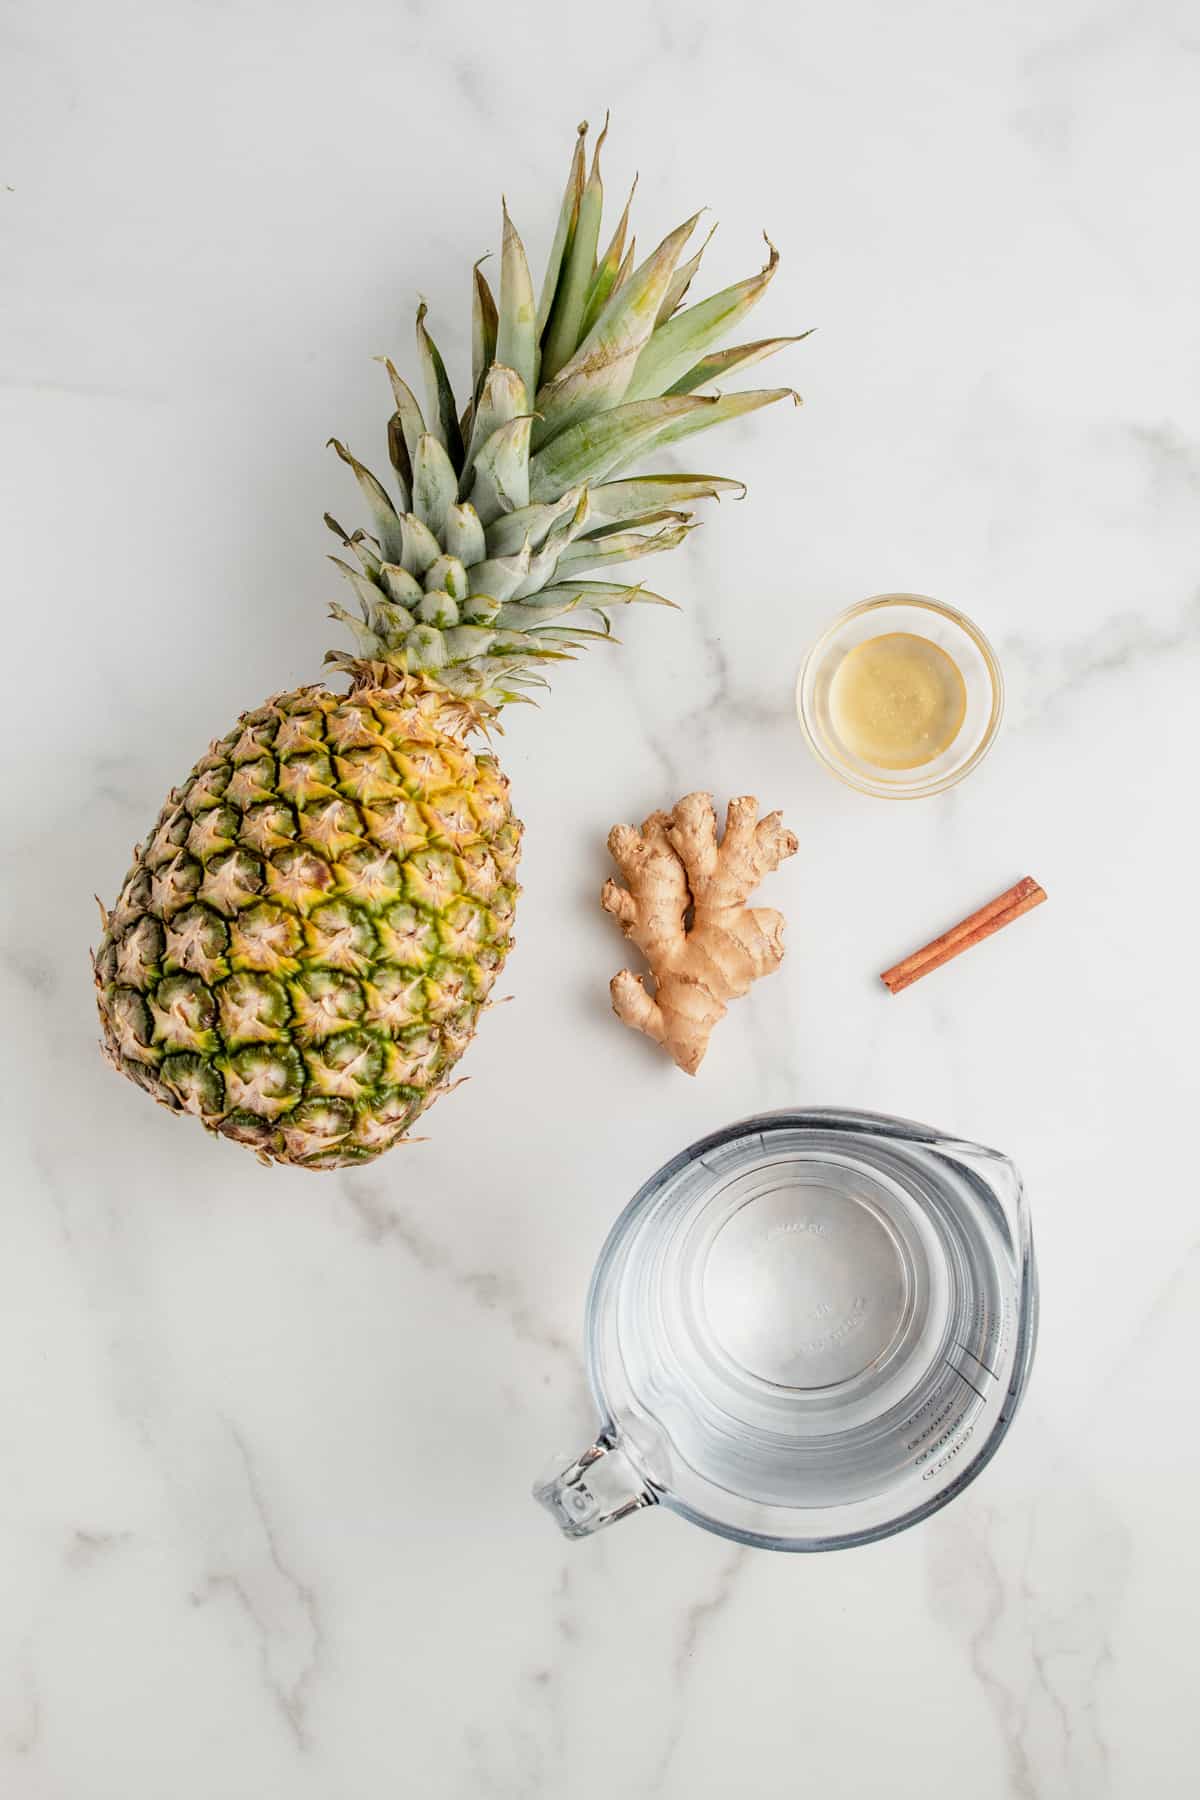 Ingredients needed to make pineapple ginger juice: pineapple, ginger, cinnamon, honey, and water.